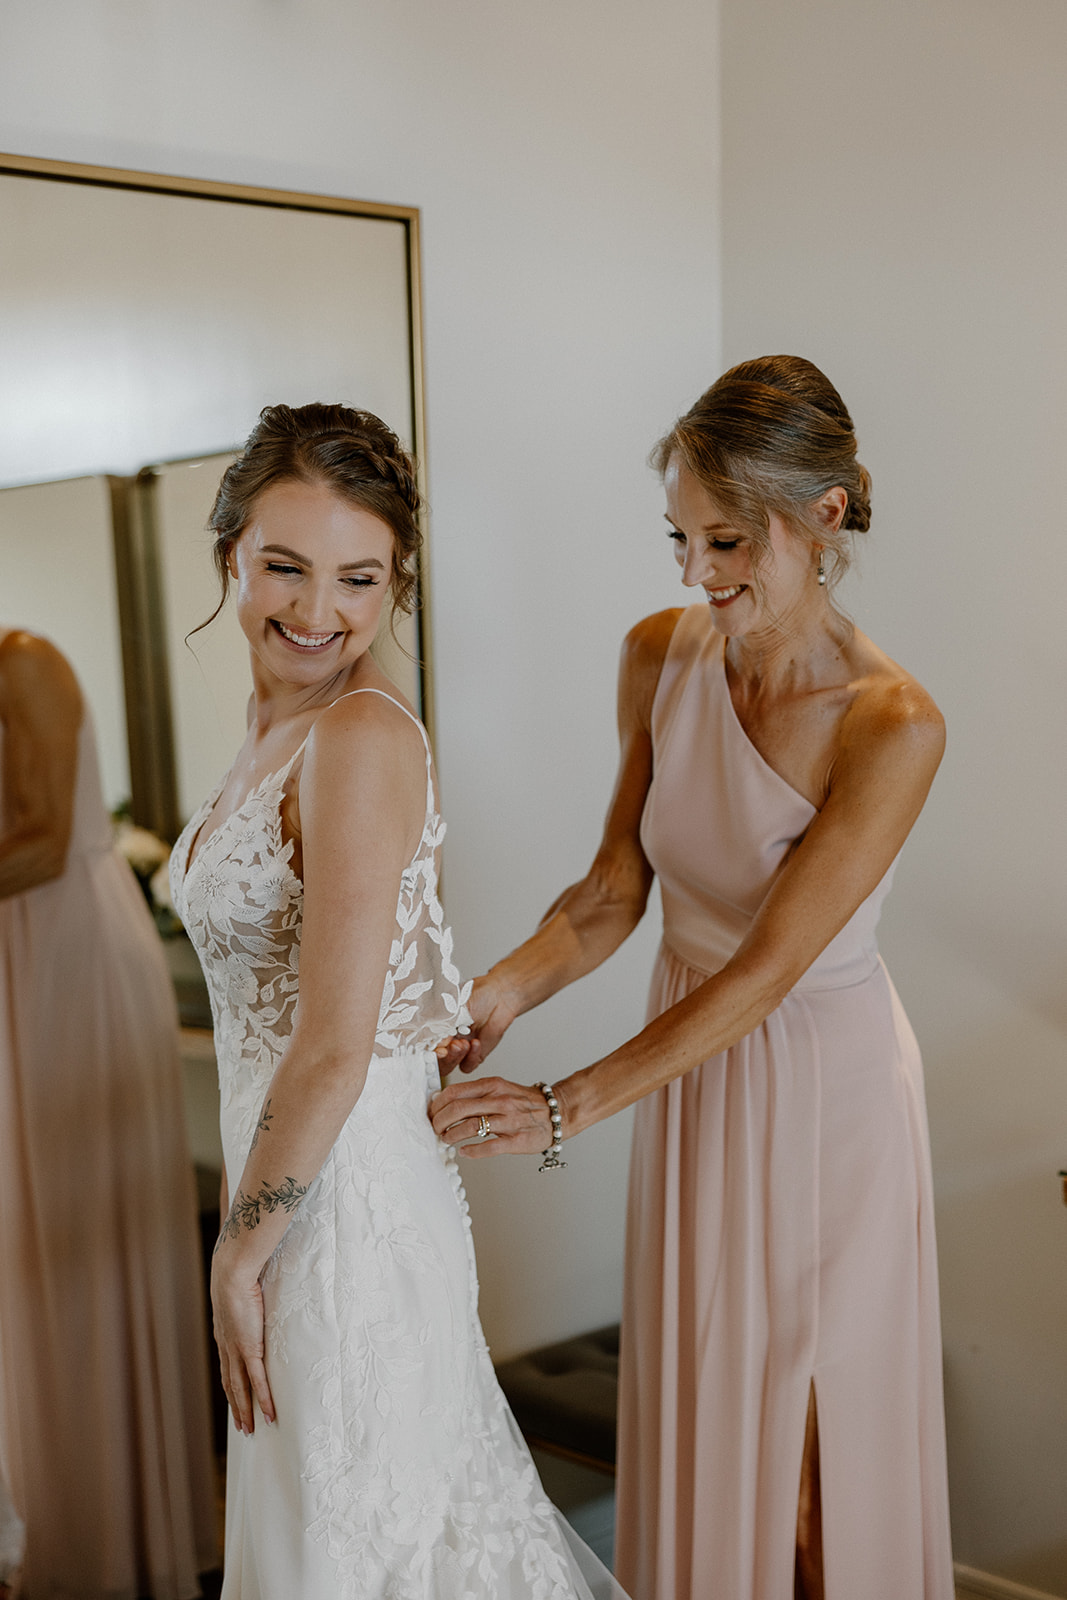 Stunning bride gets help zipping her elegant wedding dress